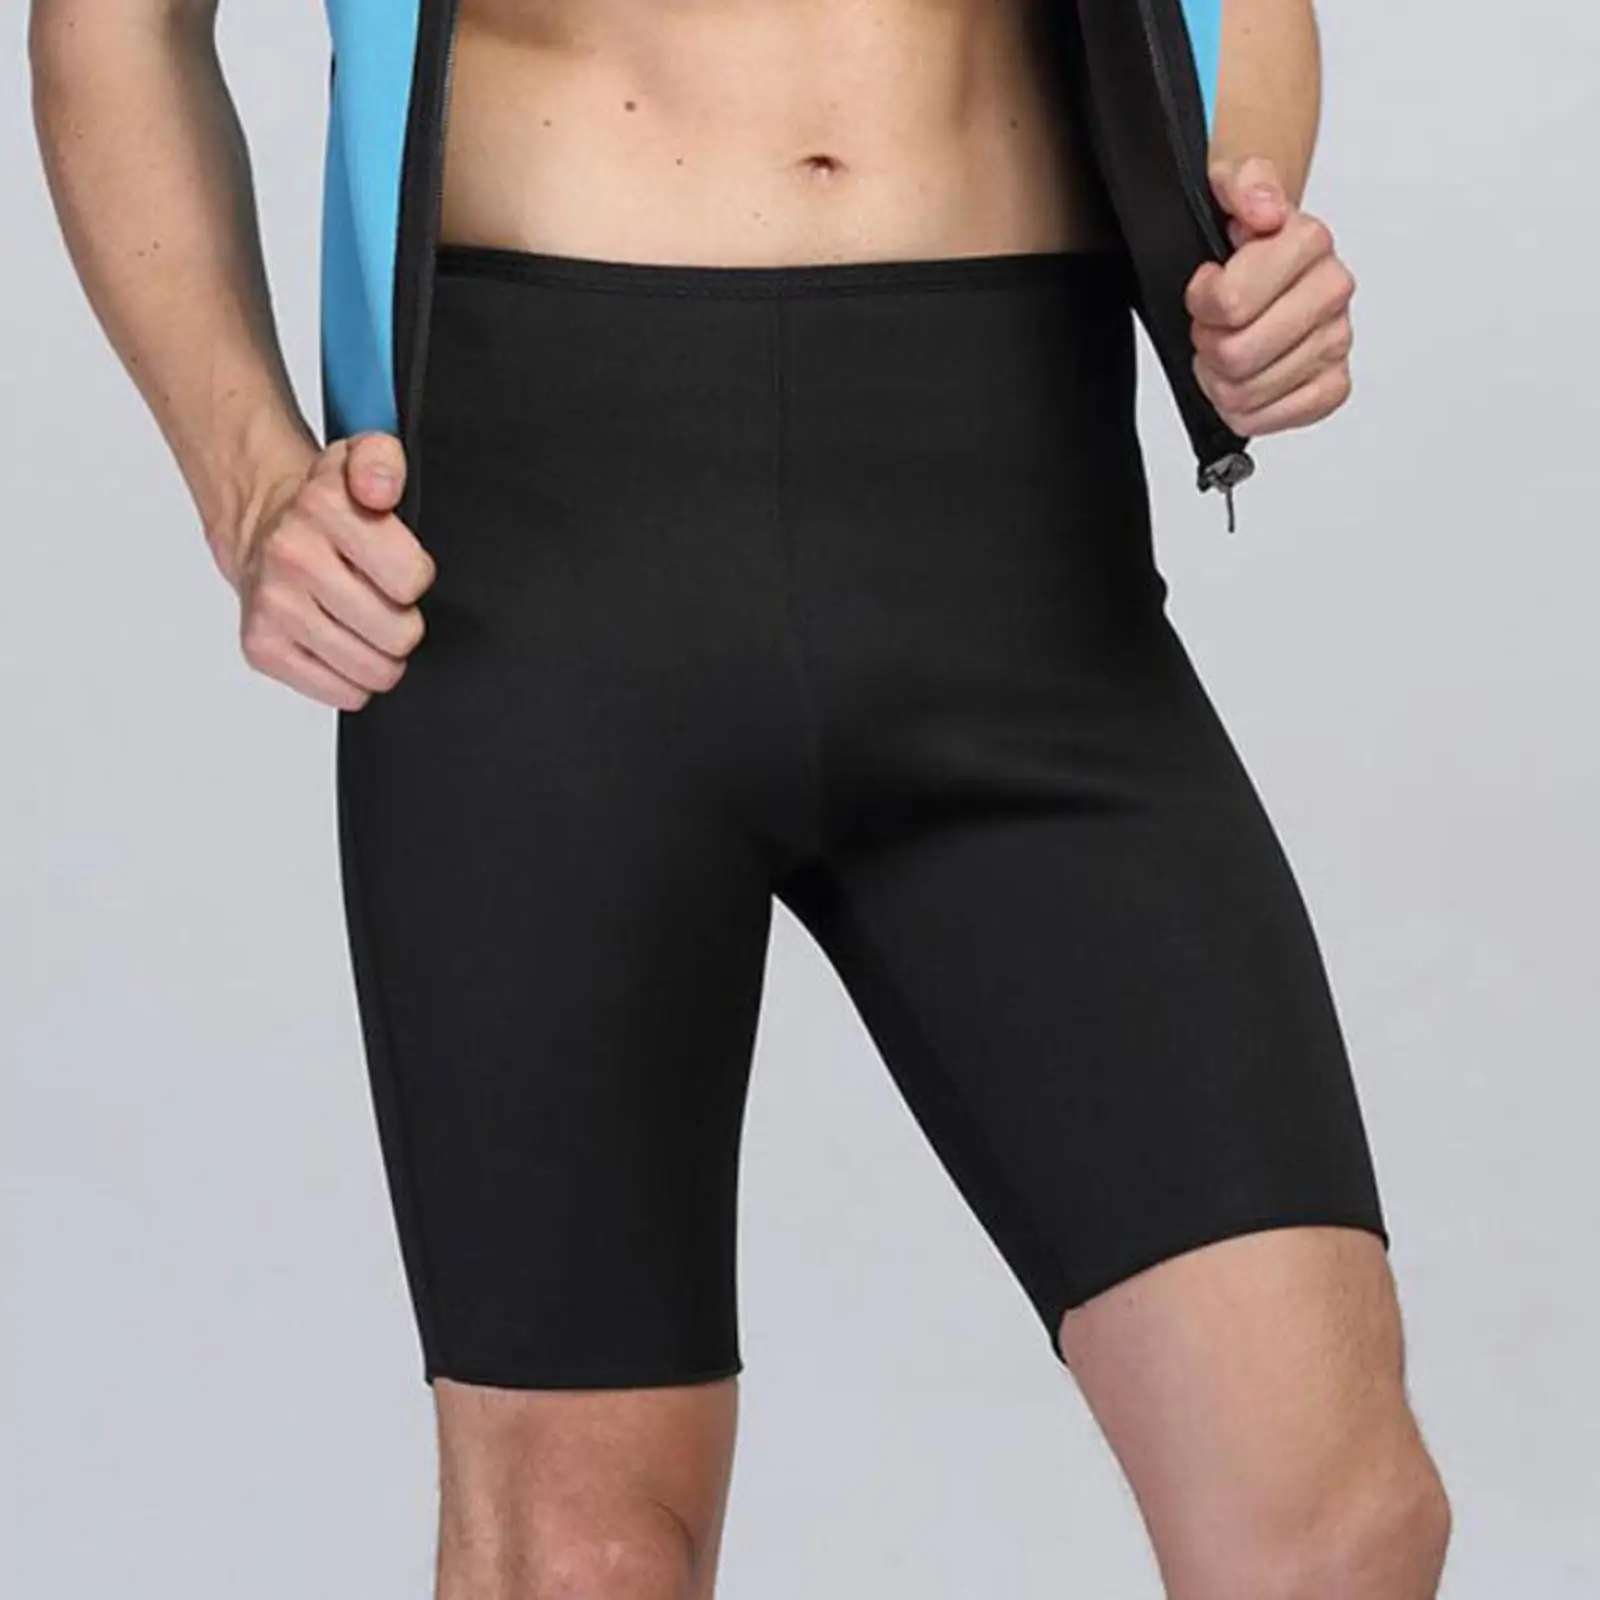 Wetsuit Shorts Men 3mm Neoprene Shorts Scuba Diving Suit Adults Surfing Kayaking Sauna Shorts Run Fitness Shorts Trunks